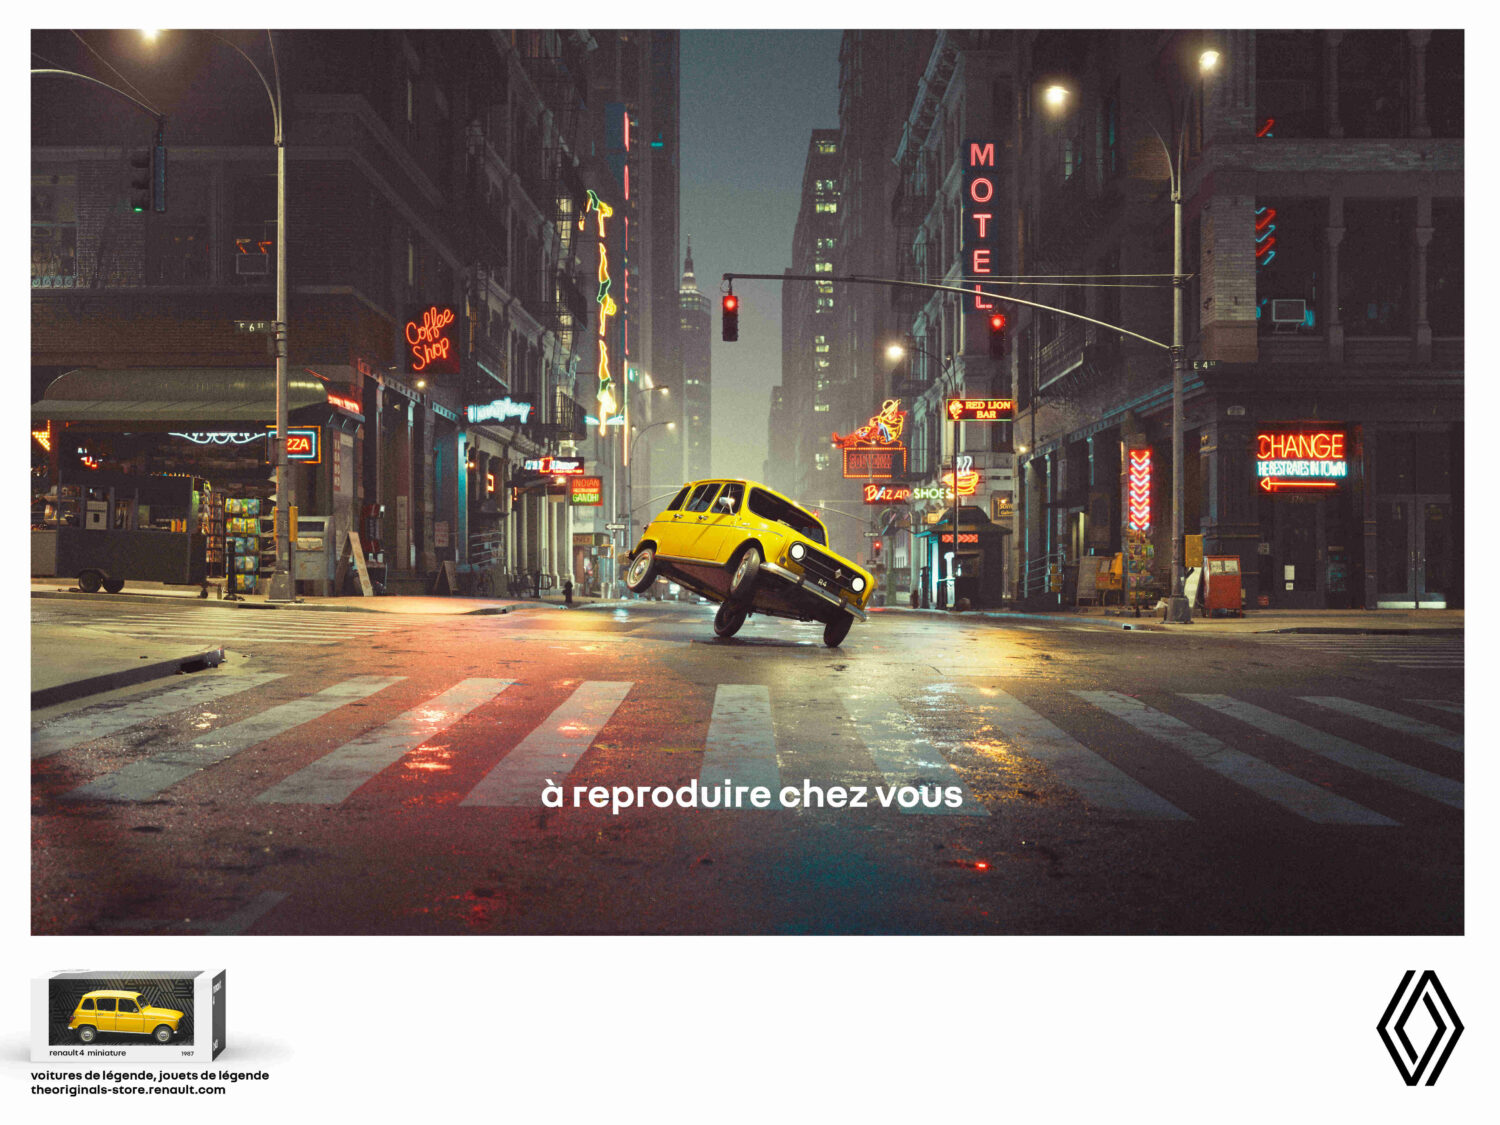 2022-Renault-Toys-OOH-4L-Publicis-Conseil.jpg